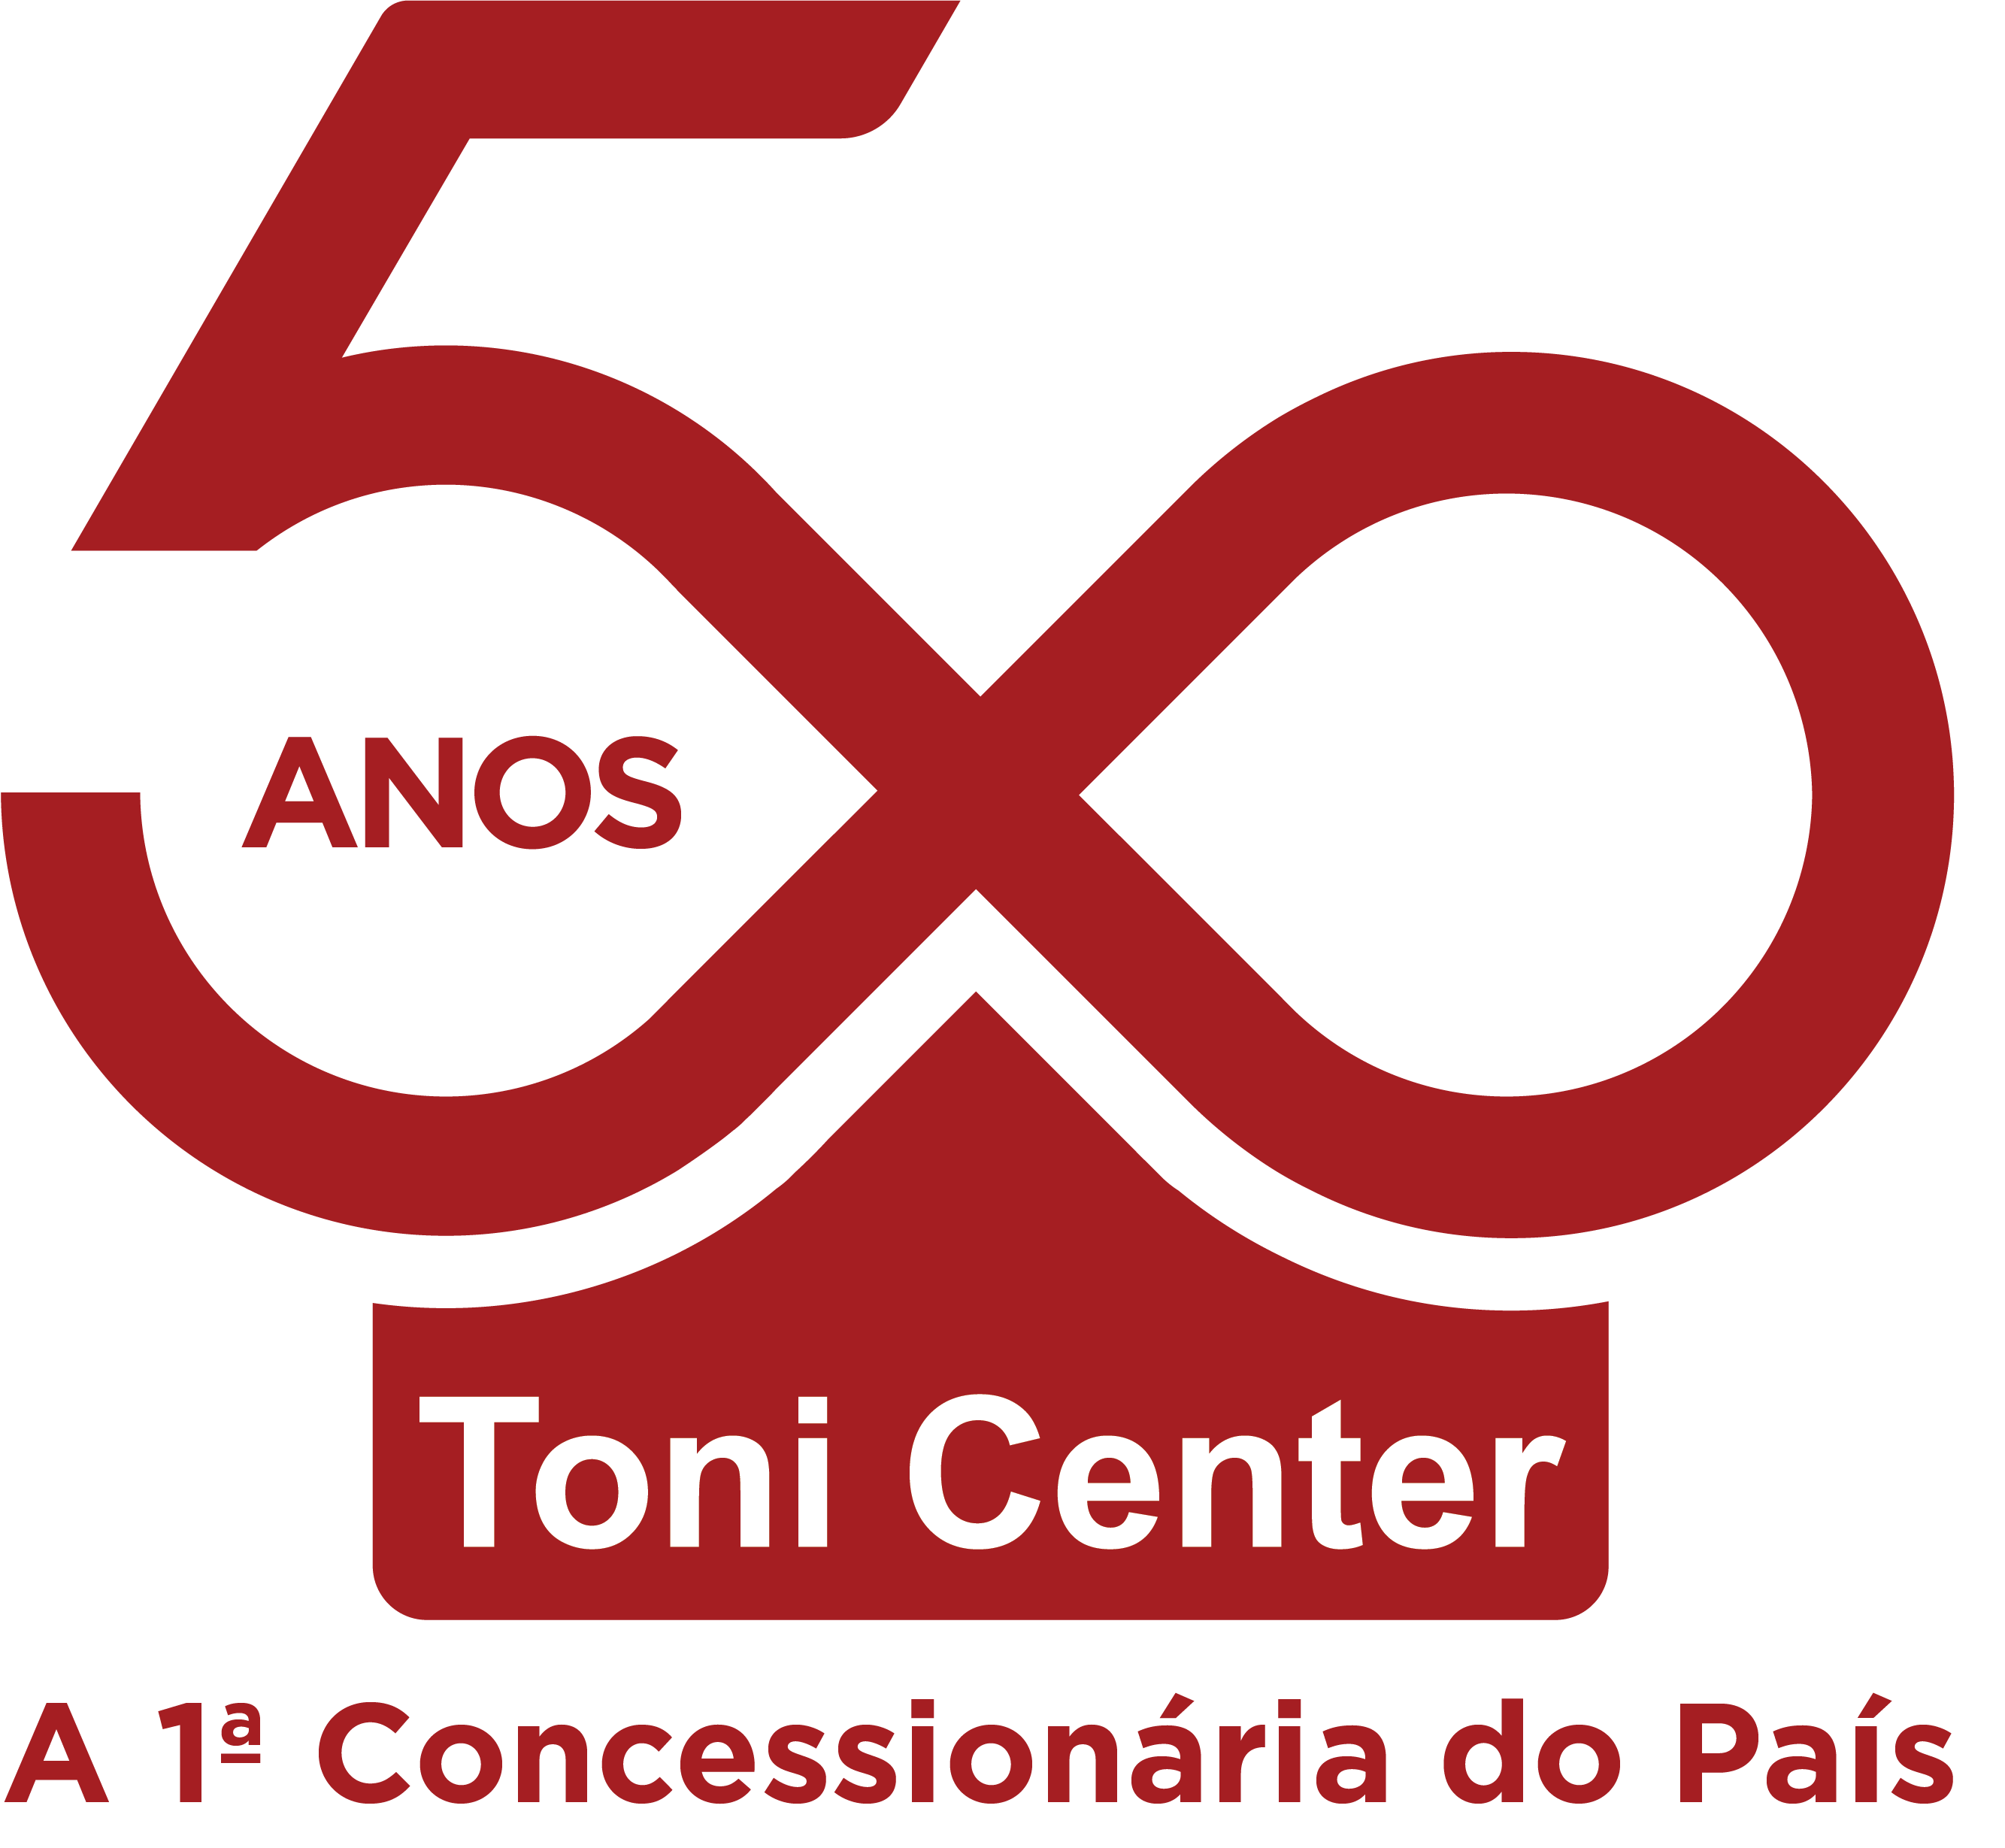 Toni Center 46 anos